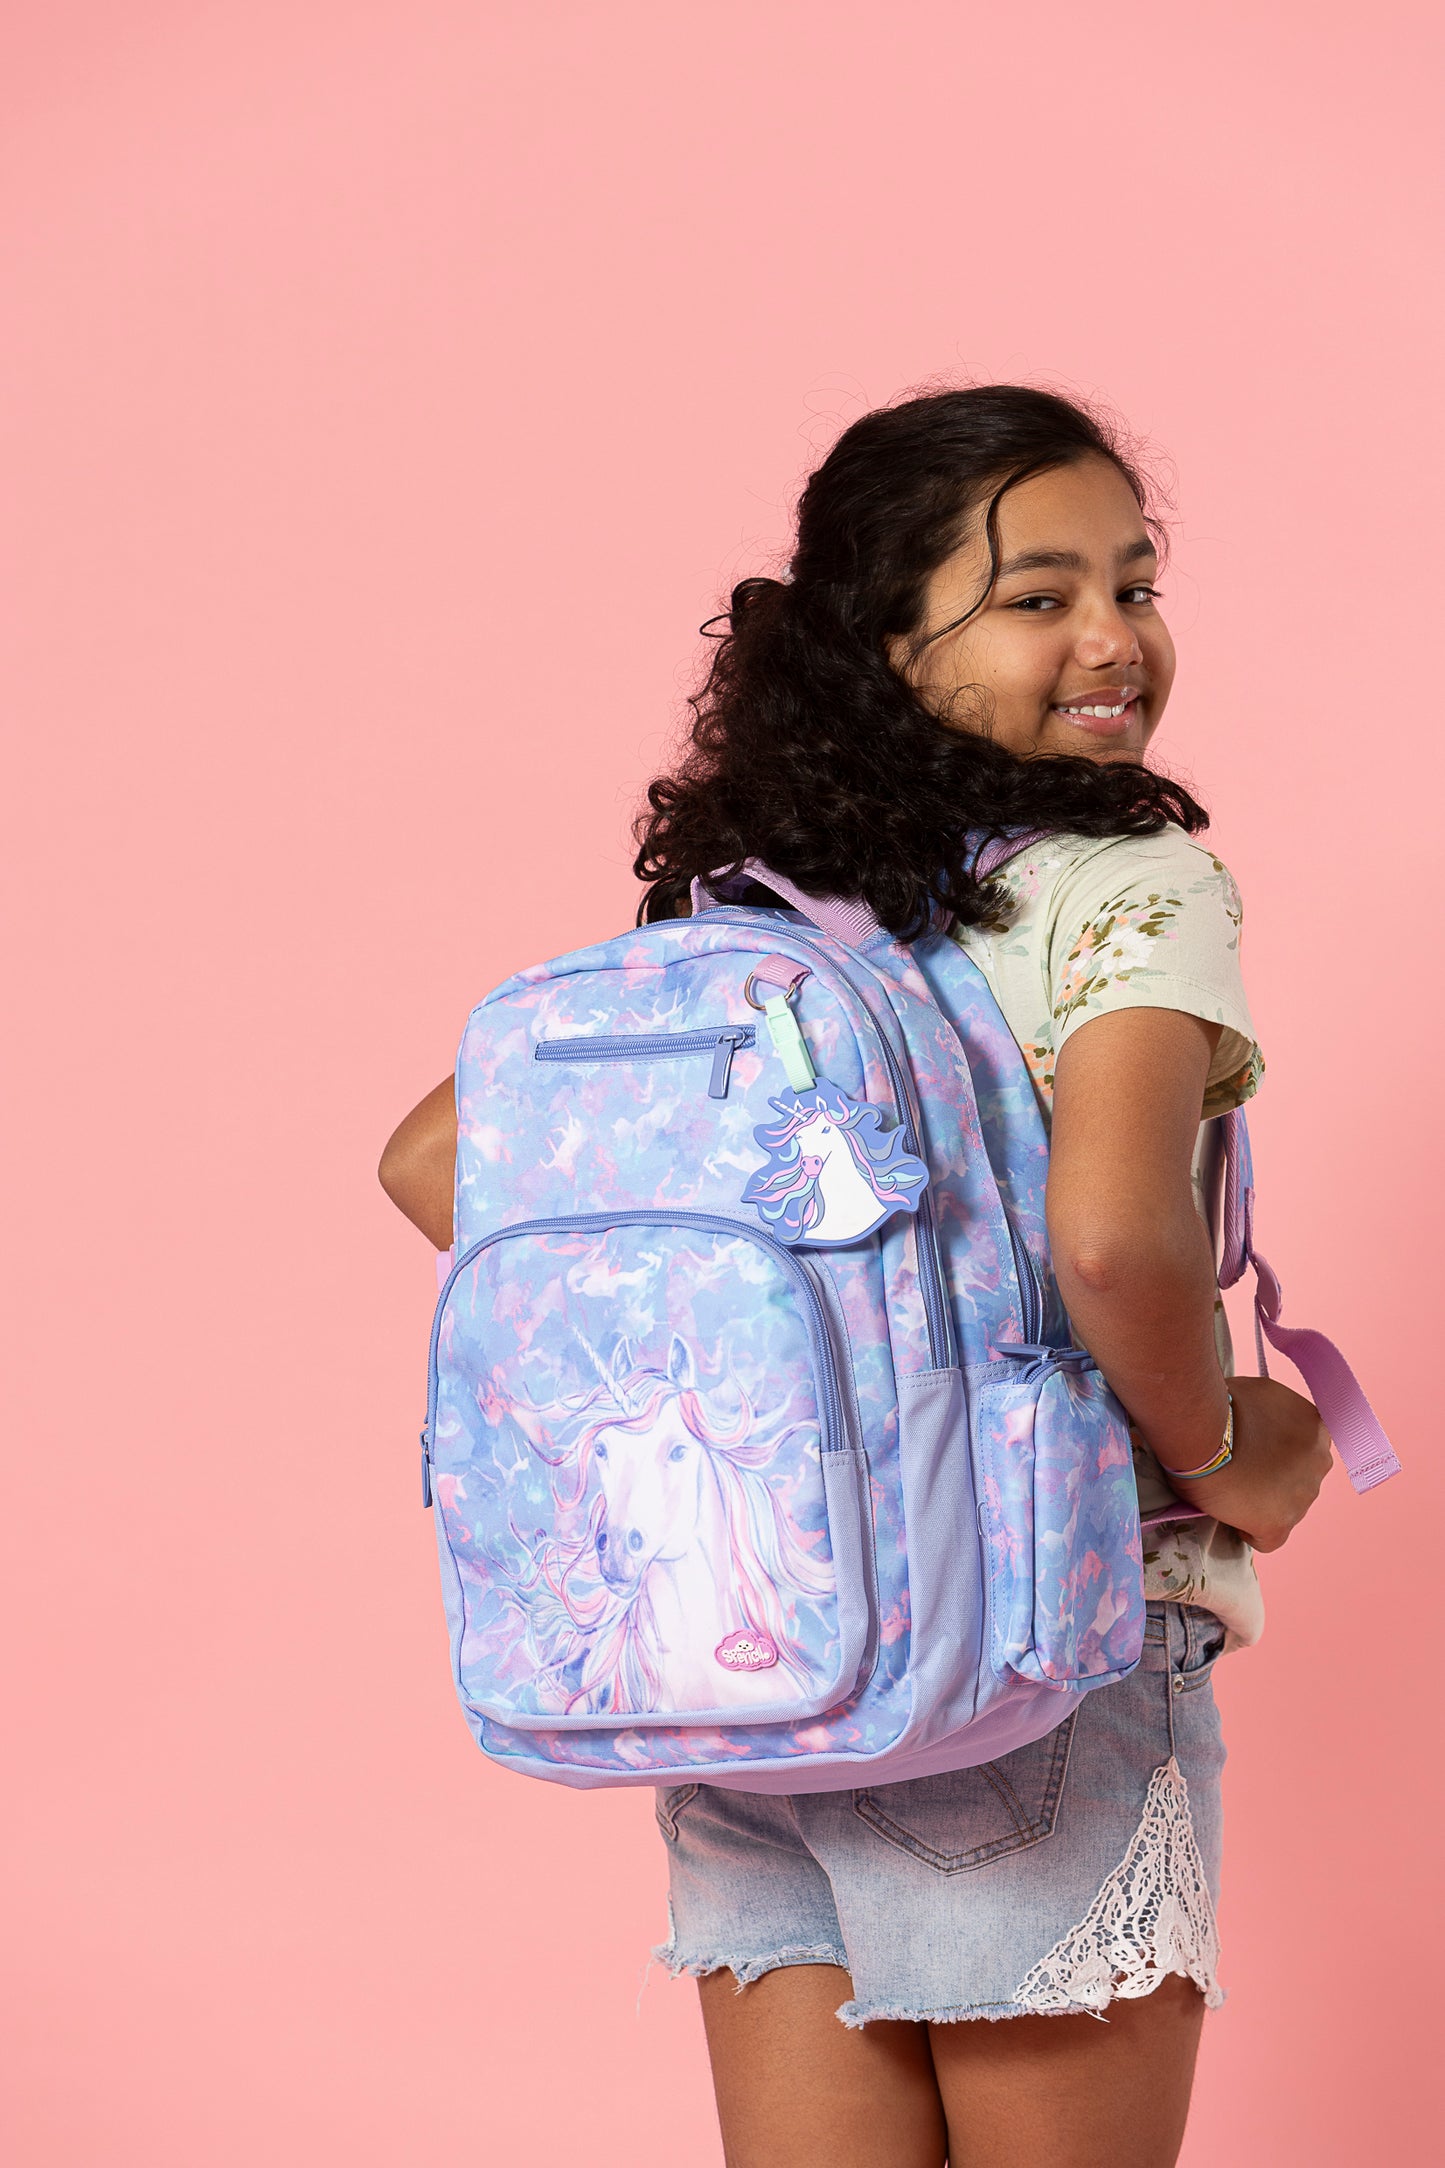 Unicorn Magic Big Kids School Backpack